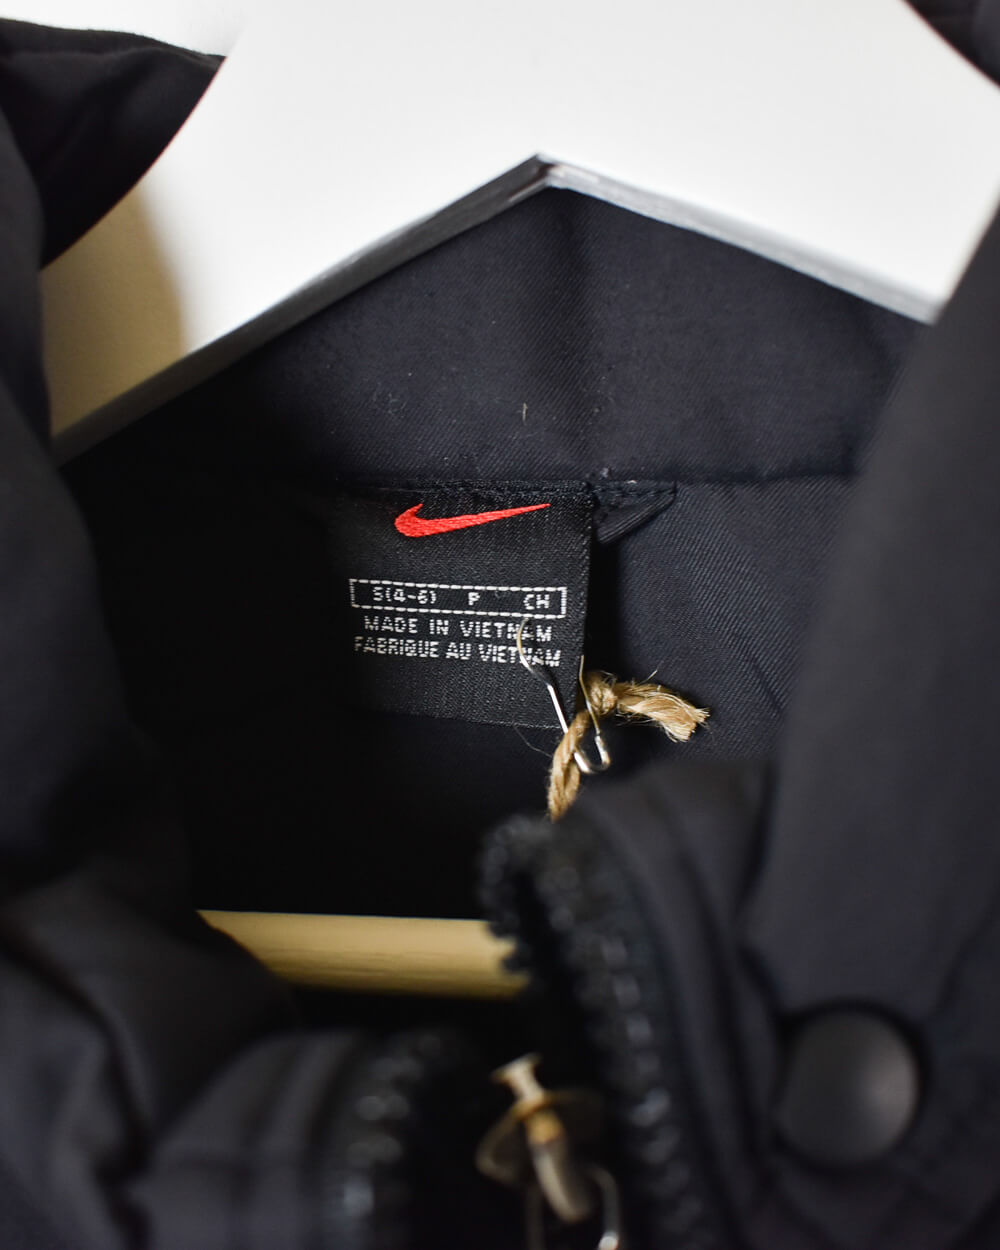 Black Nike Women's Jacket - Small